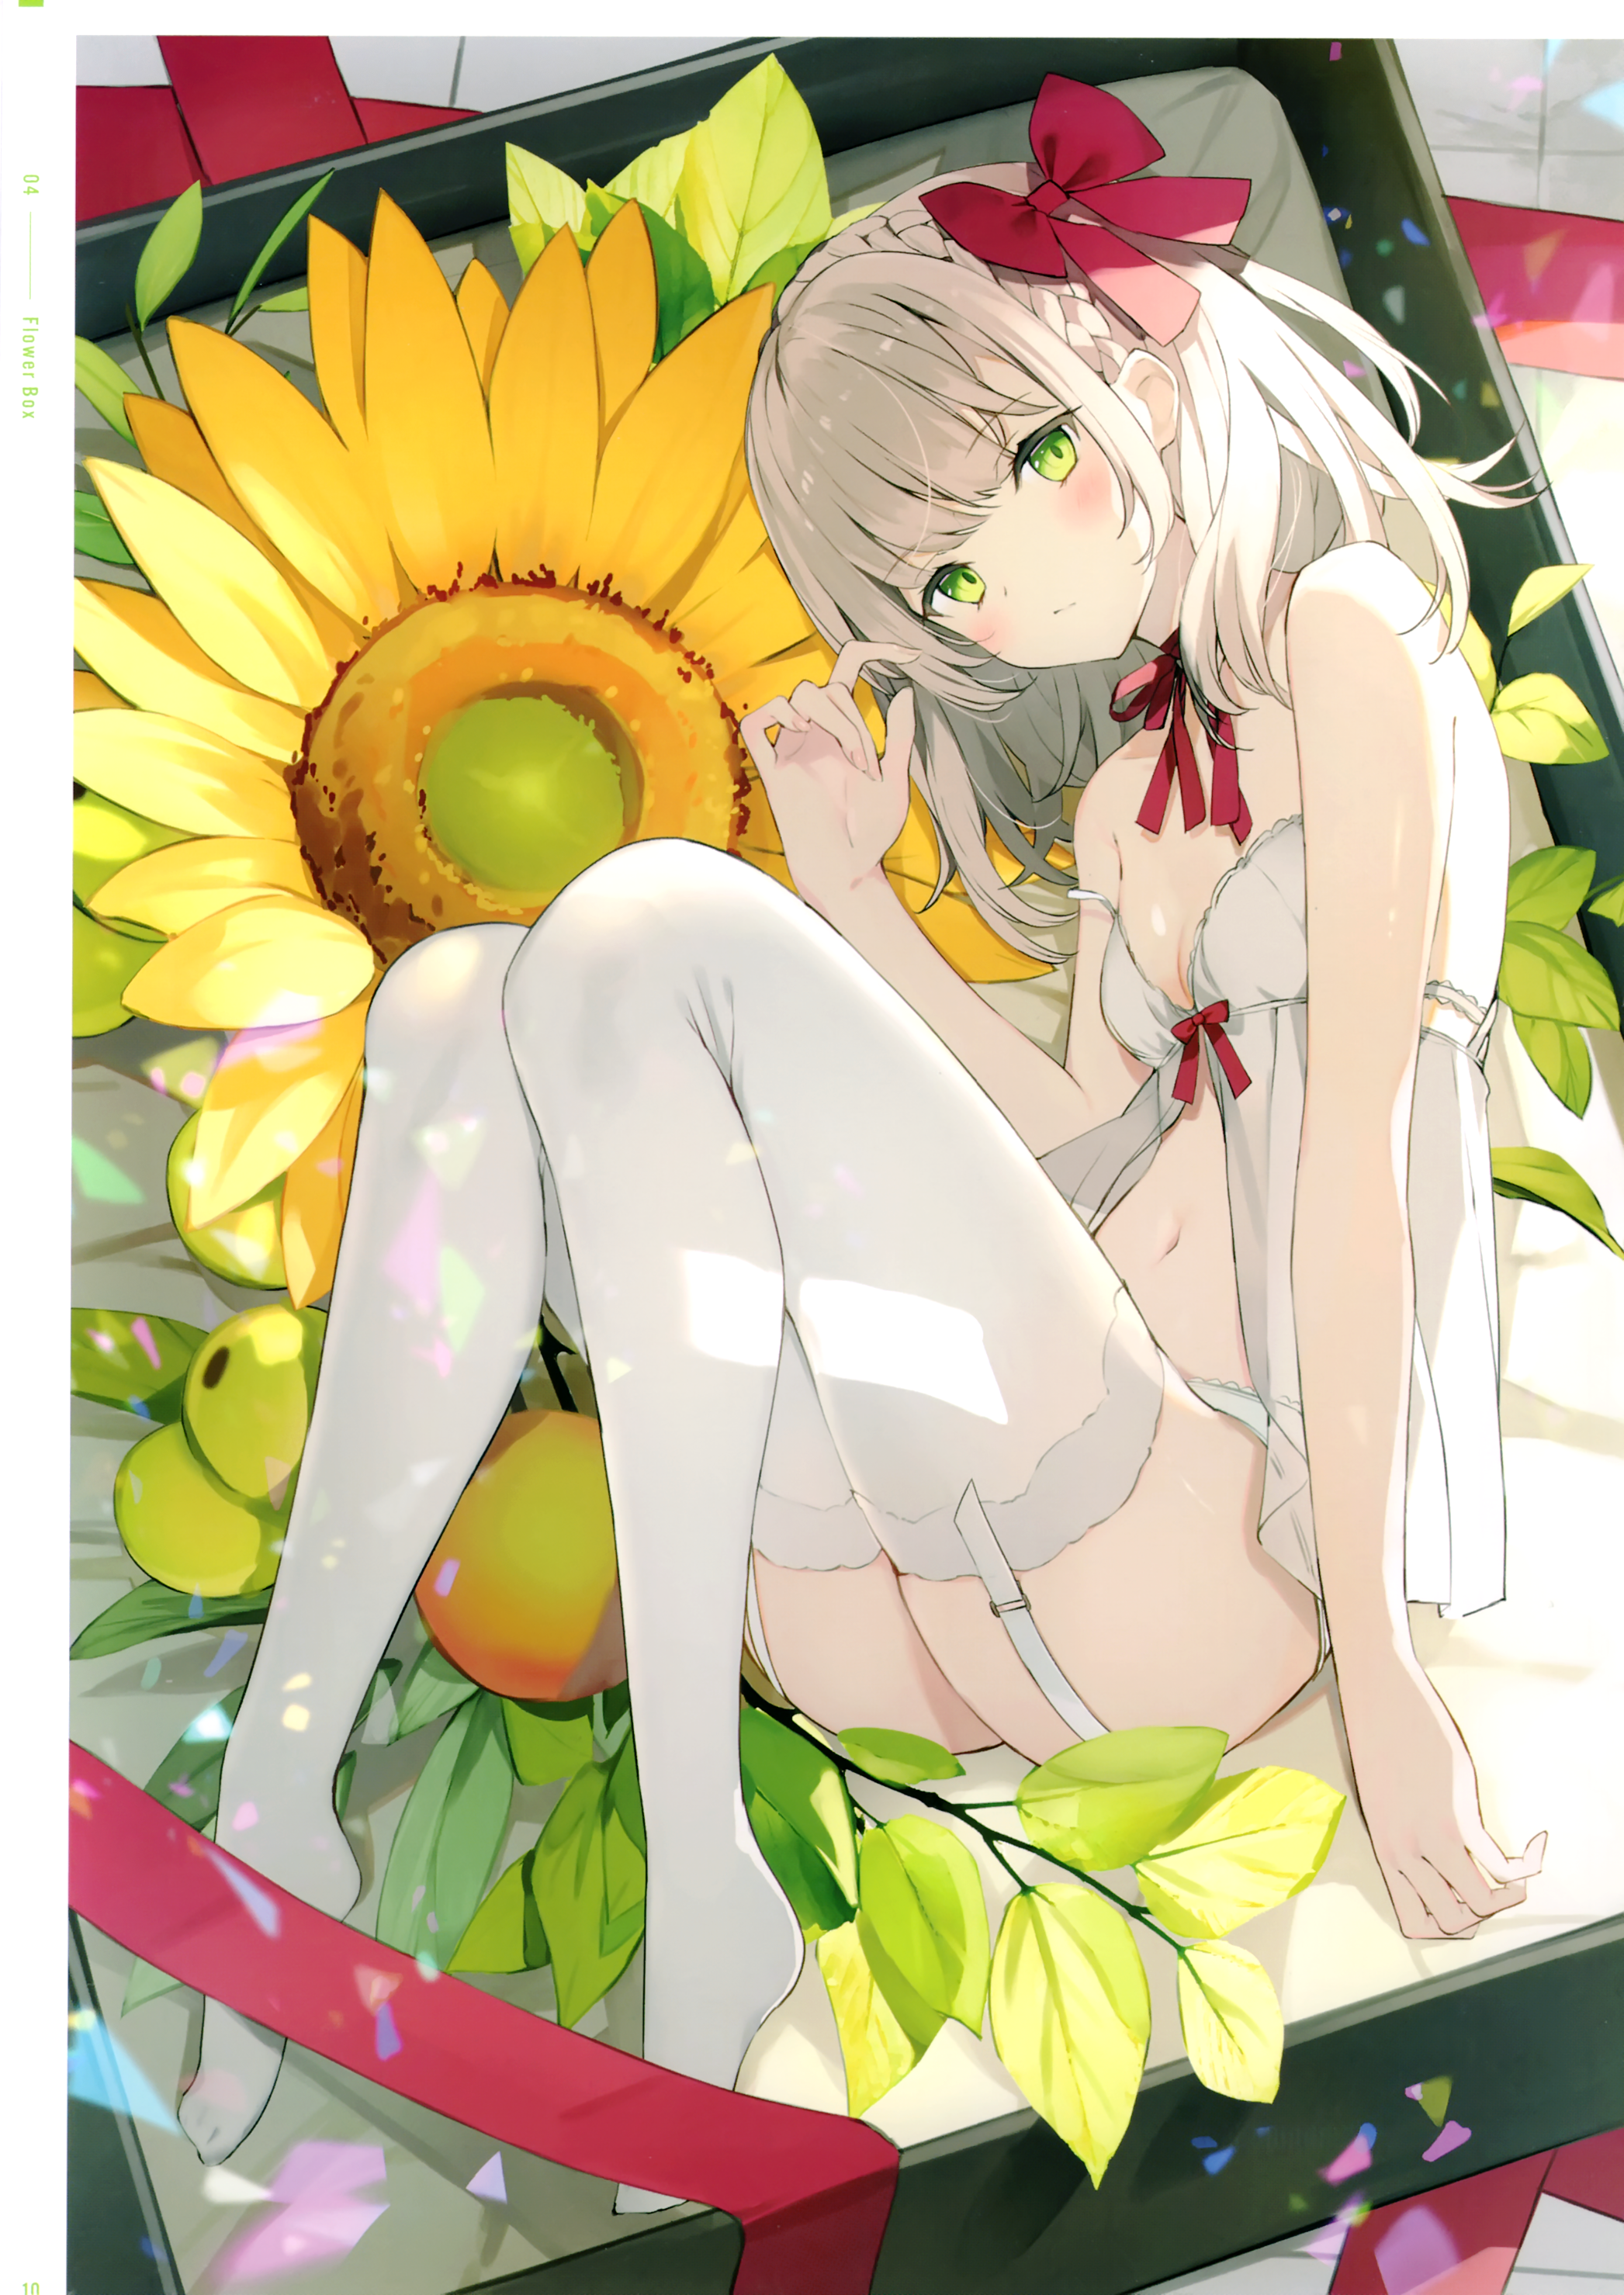 Anime 2093x2958 anime anime girls digital art artwork 2D portrait display Ashima silver hair green eyes blushing thigh-highs garter straps lingerie sunflowers